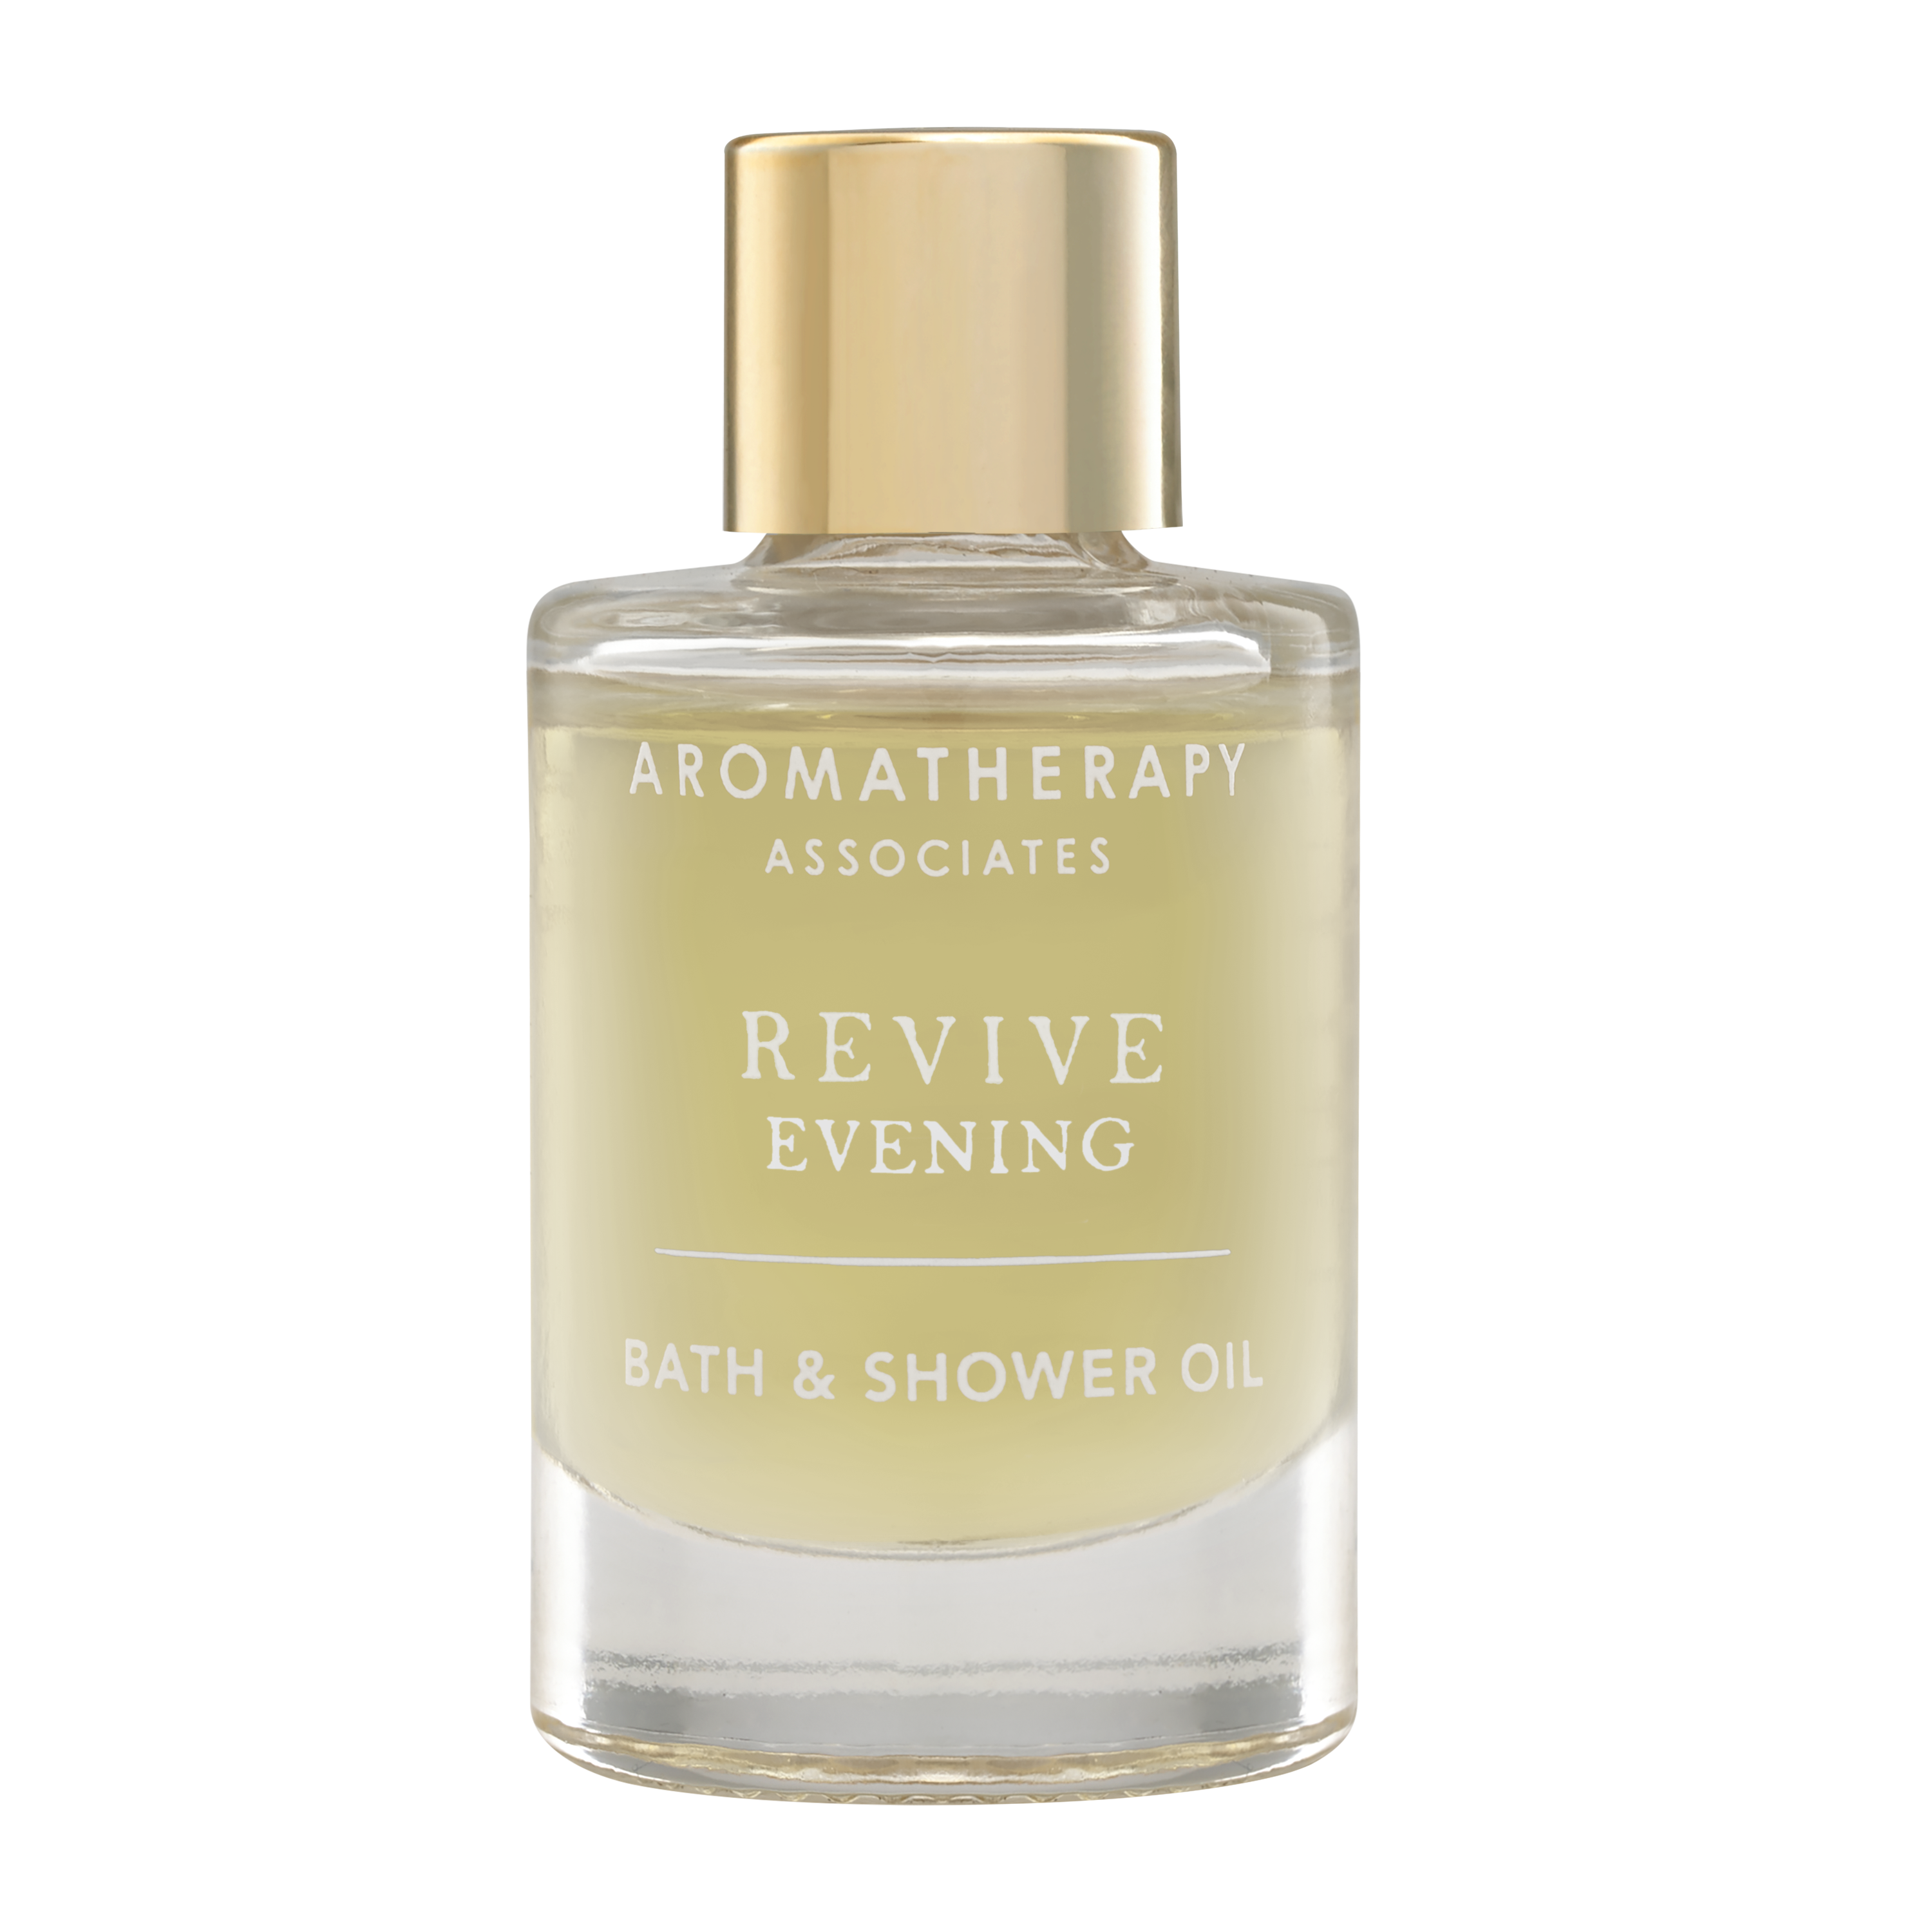 Revive Evening Bath & Shower Oil 9ml Aromatherapy Associates